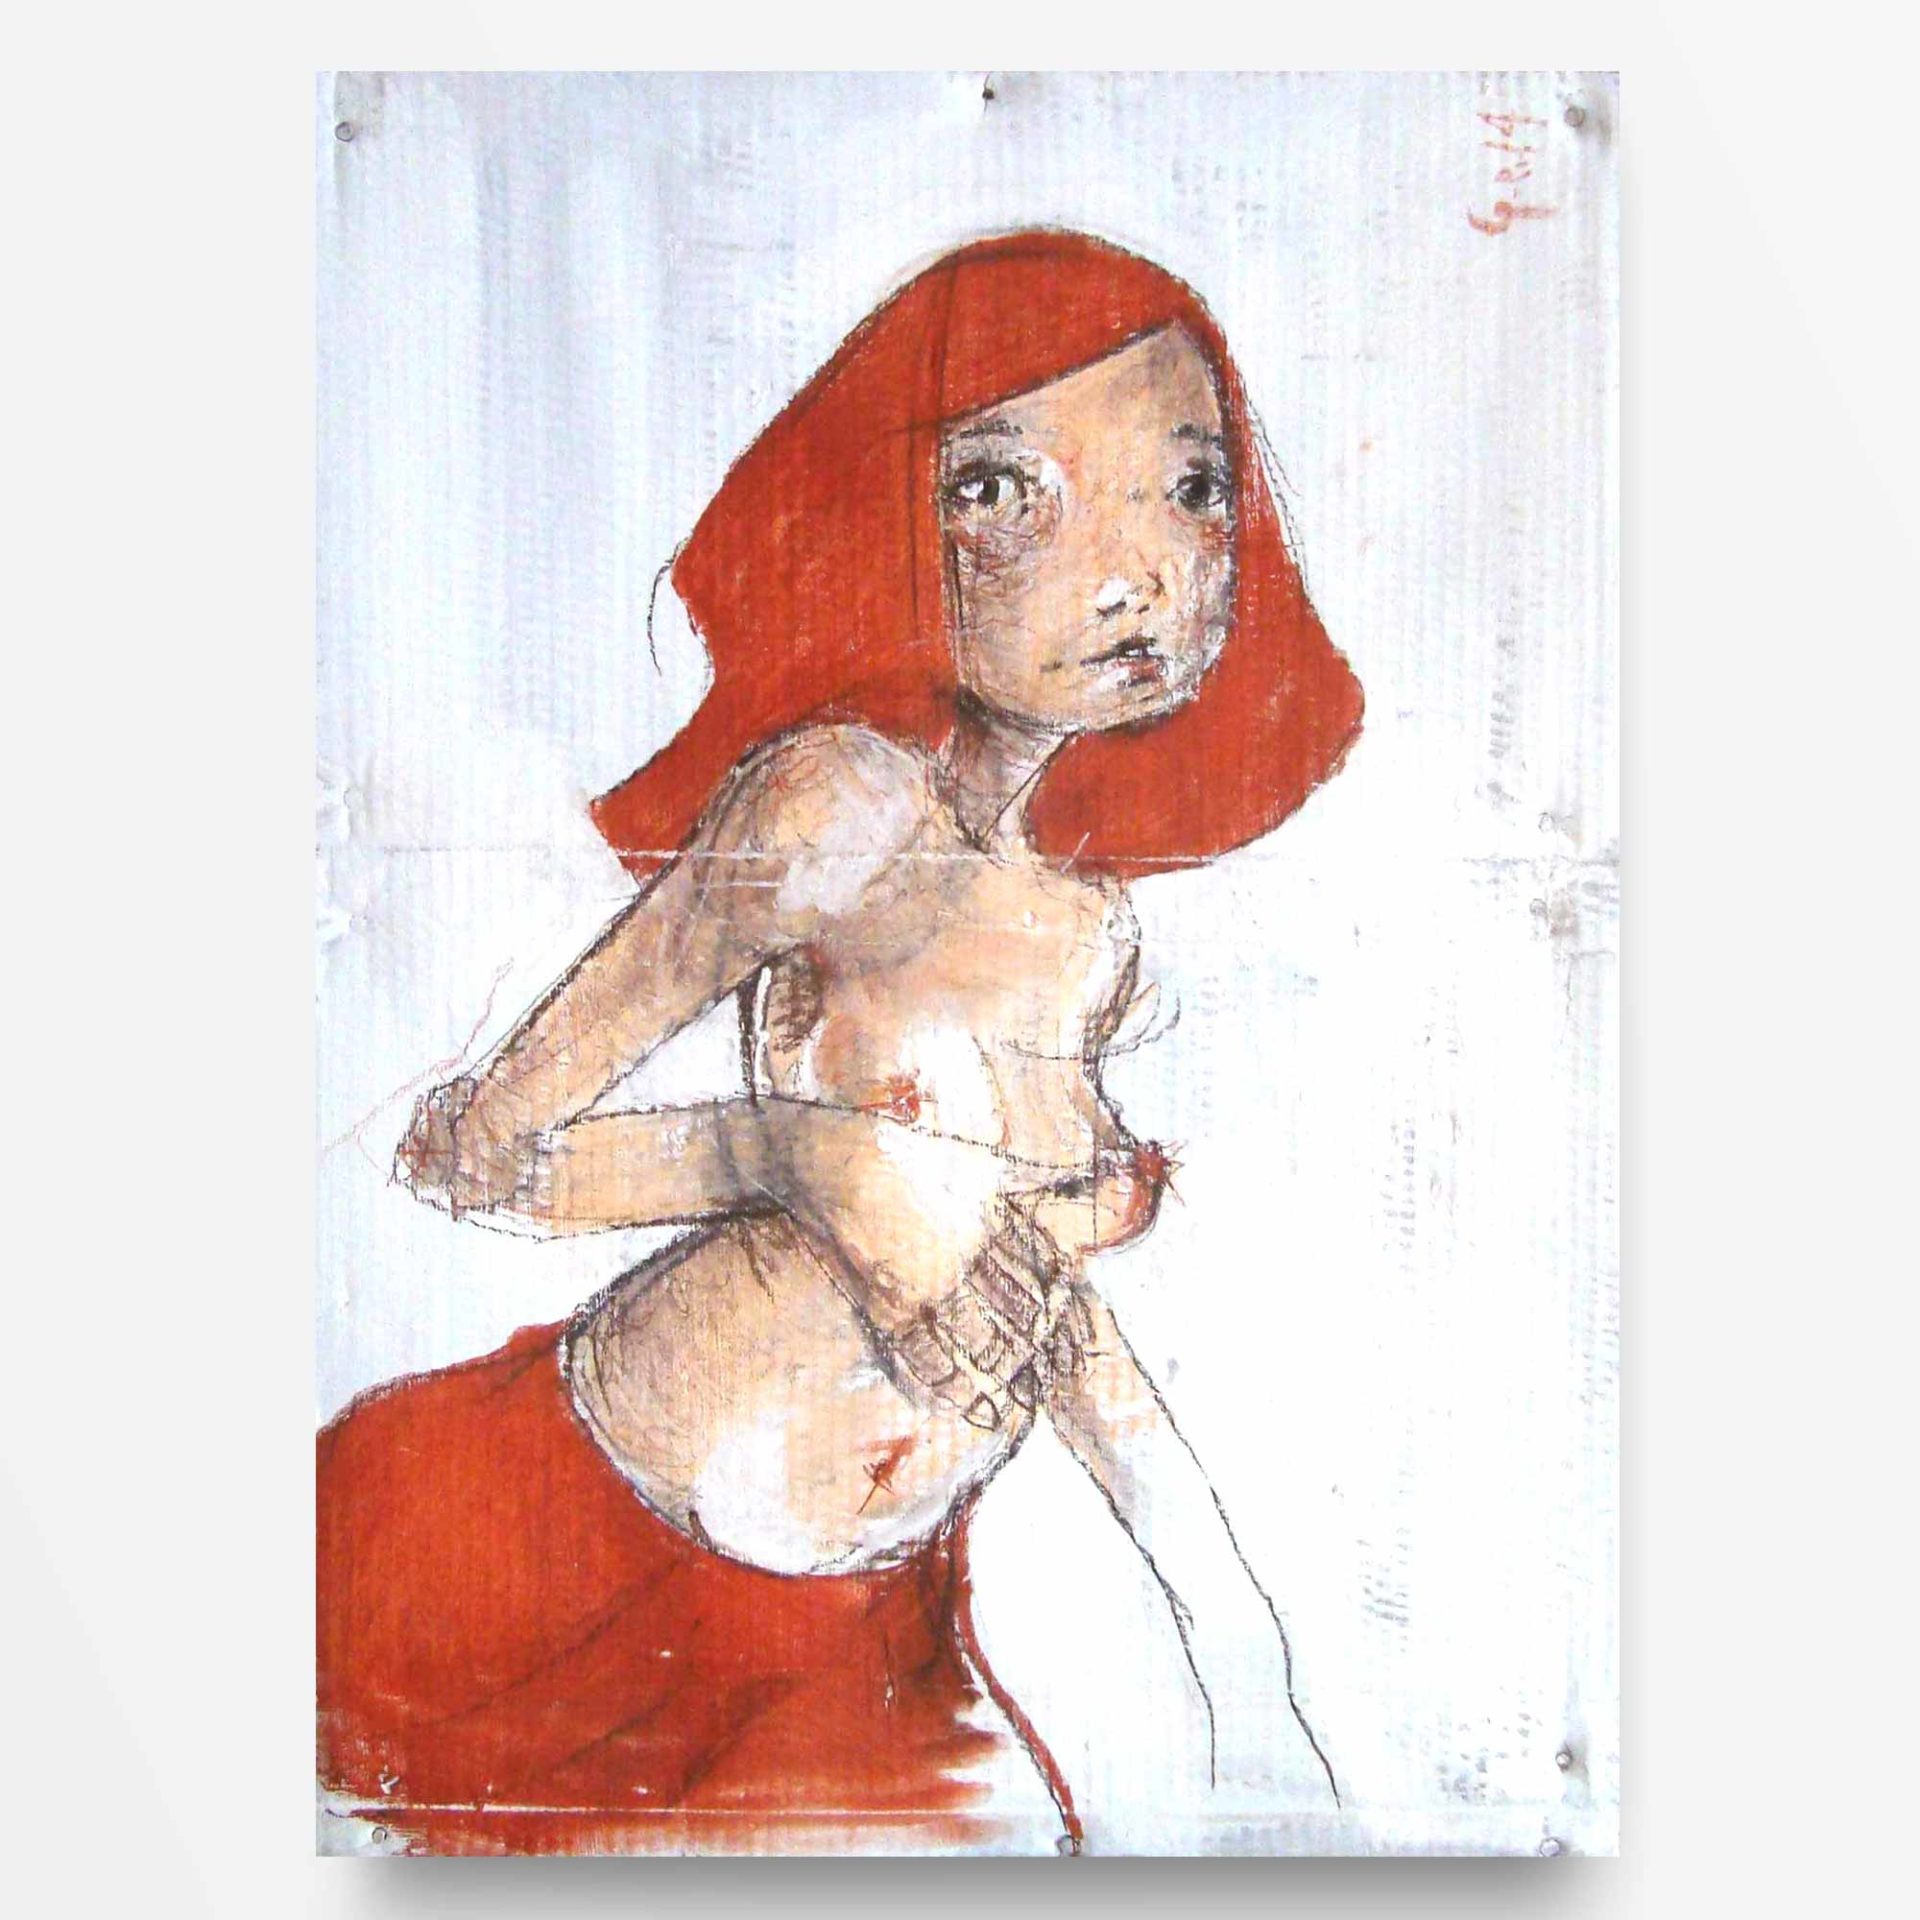 2014 ragazza dai capelli rossi 70x50 diego gabriele 00 pittura contemporanea